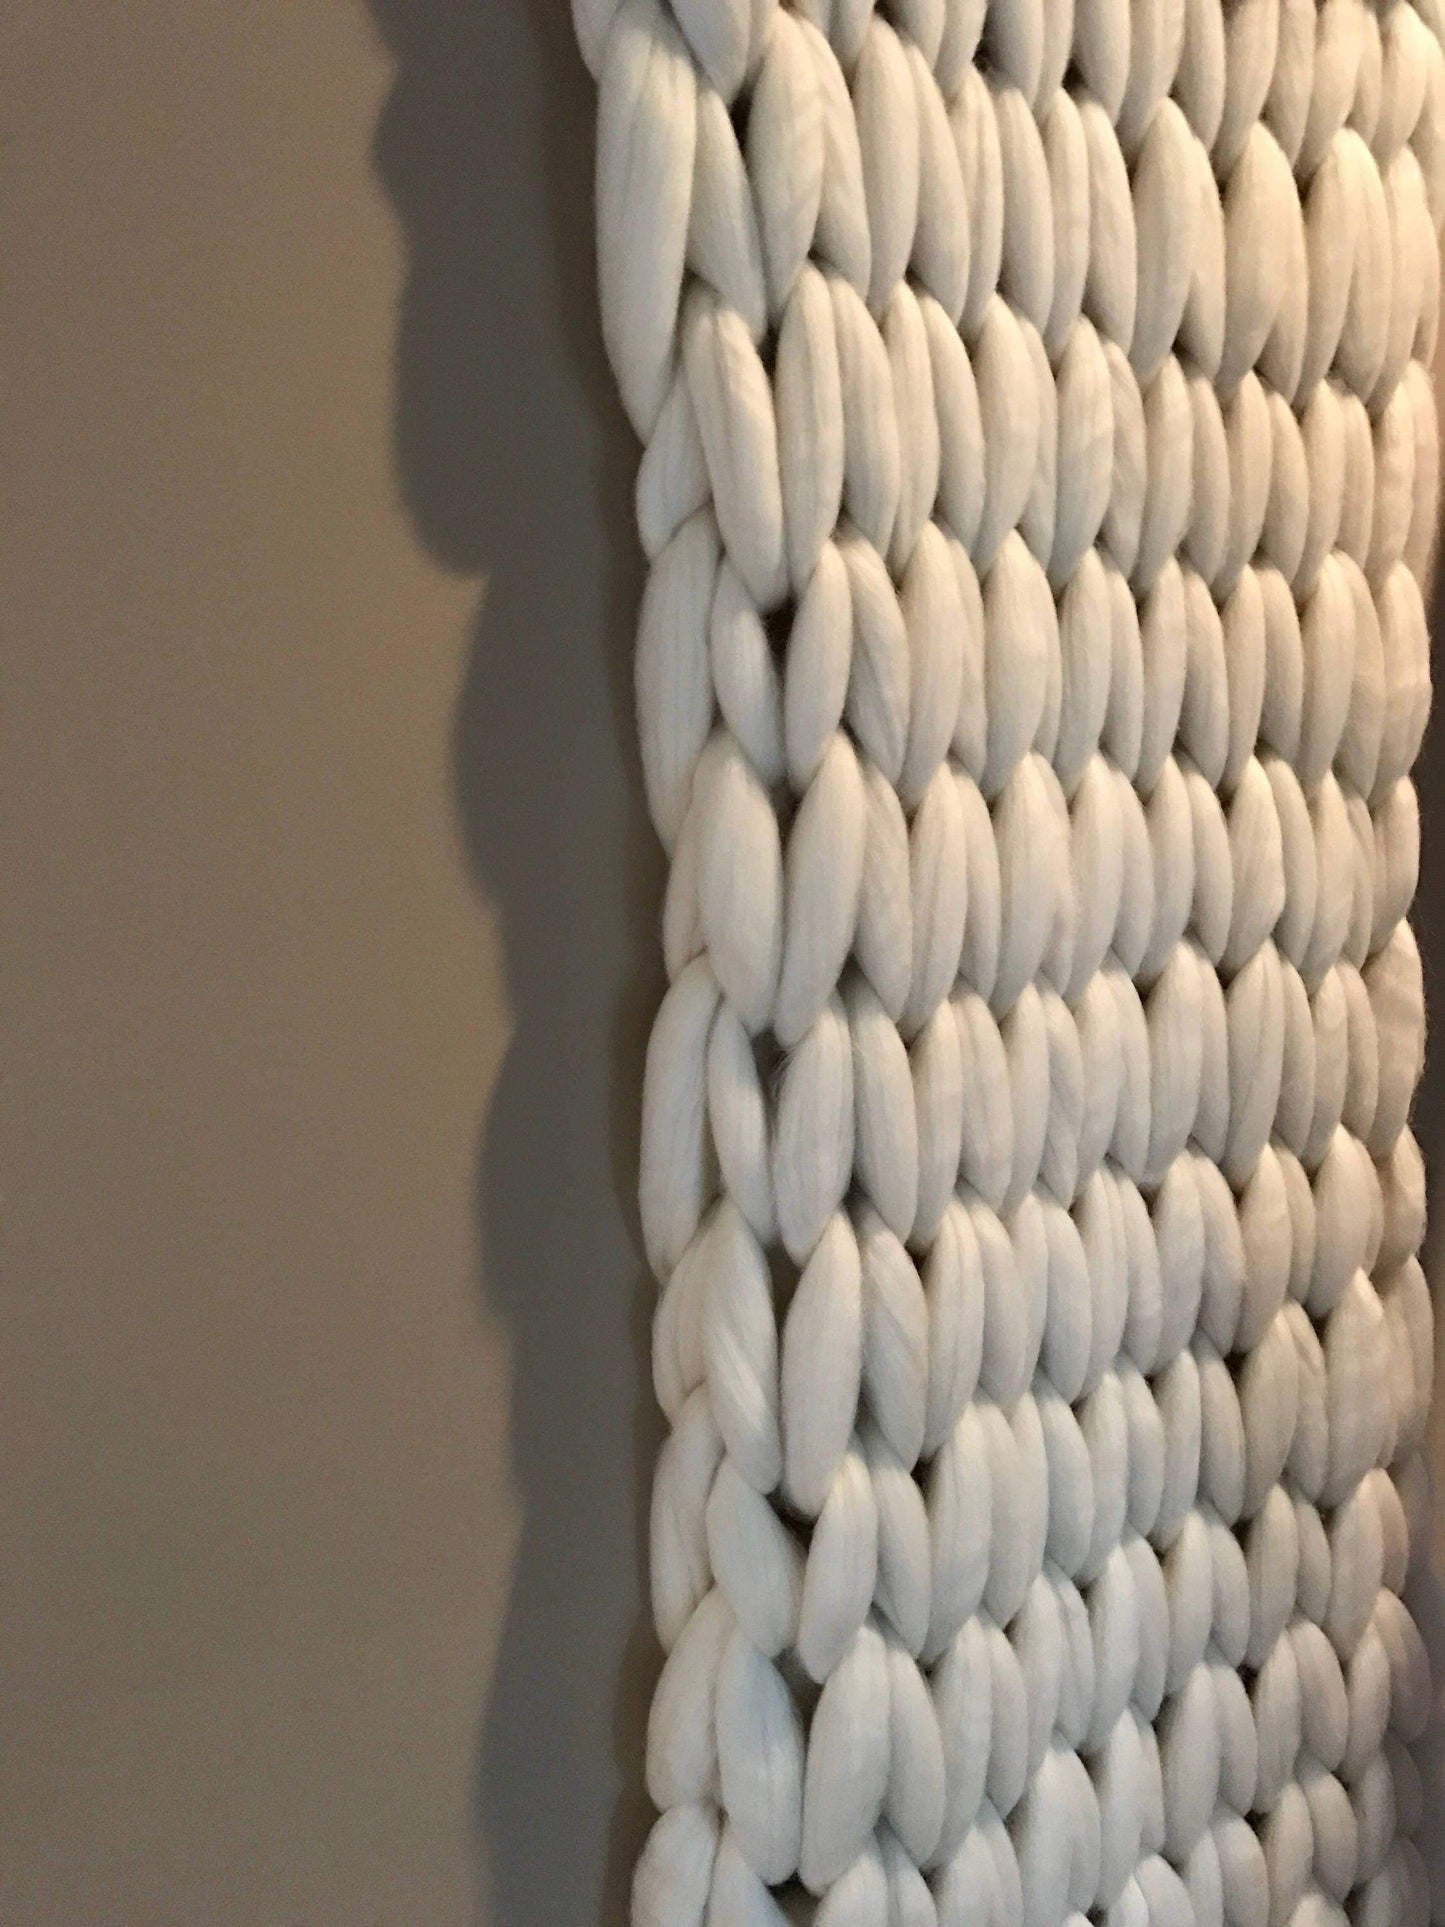 Super Chunky Knit Merino Wool Wall Hanging 30" x 50"  Visully soft and warm - Beautiful!